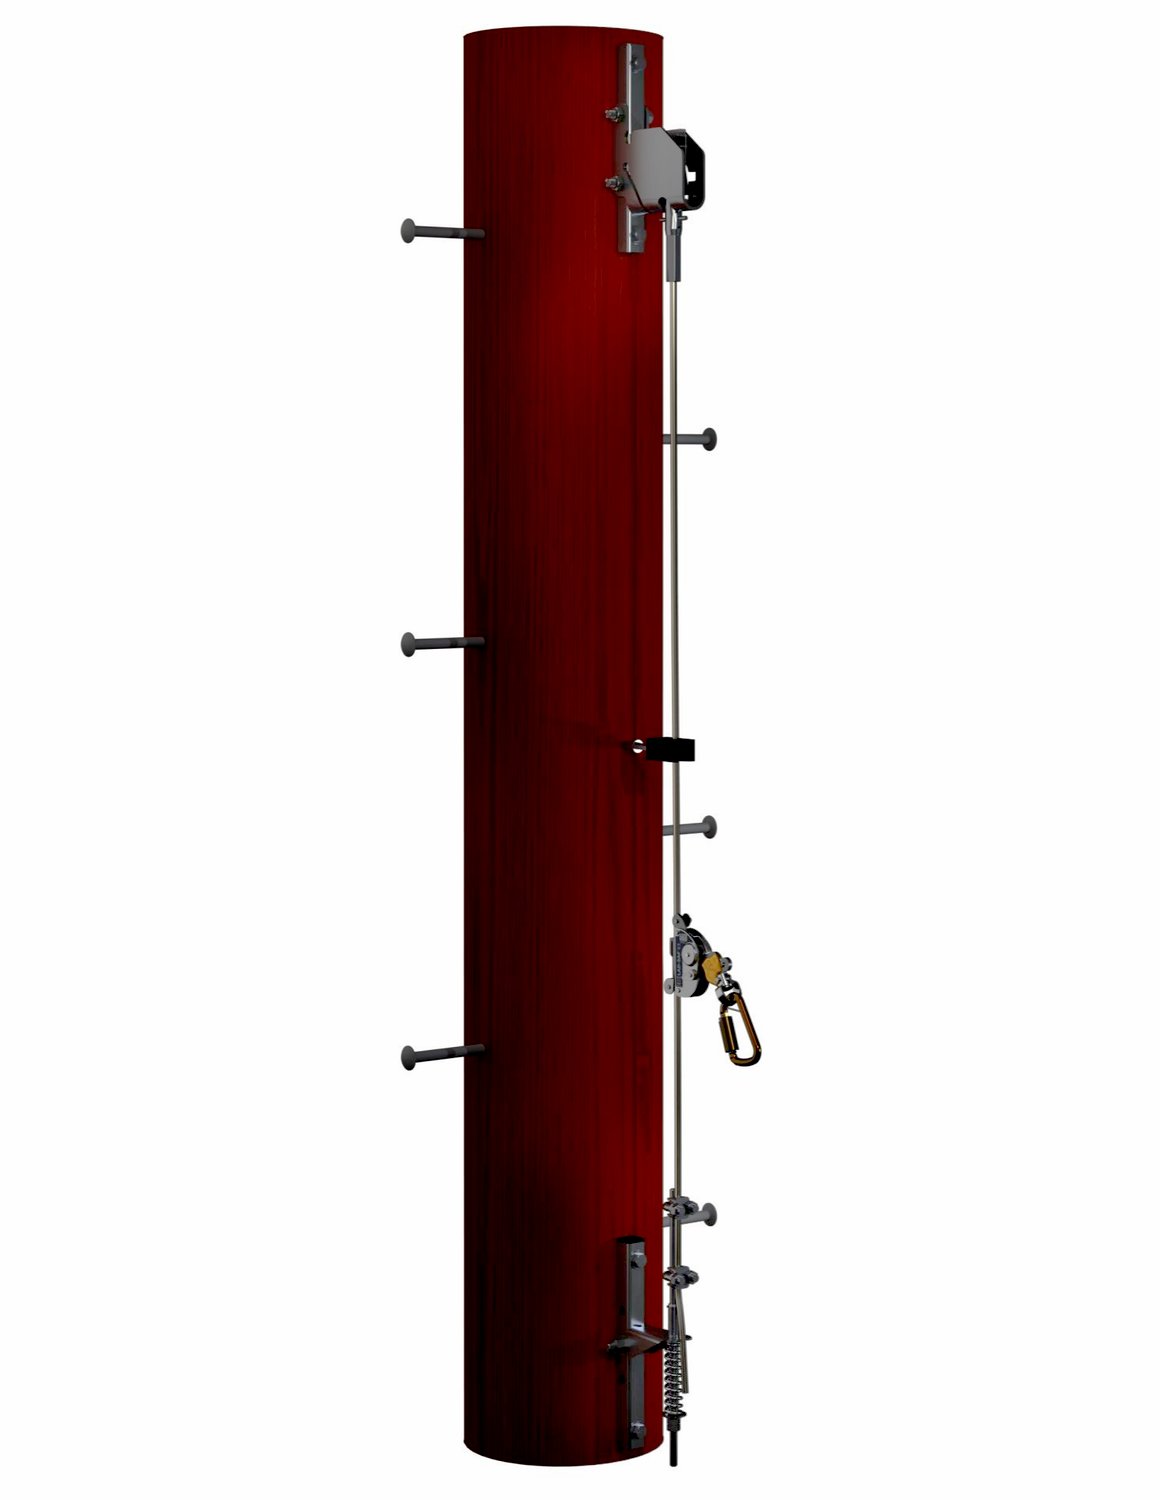 7100261159 - 3M DBI-SALA Lad-Saf Cable Vertical Safety System Bracketry For Wood Pole 6116635, 2 User, Galvanized Steel